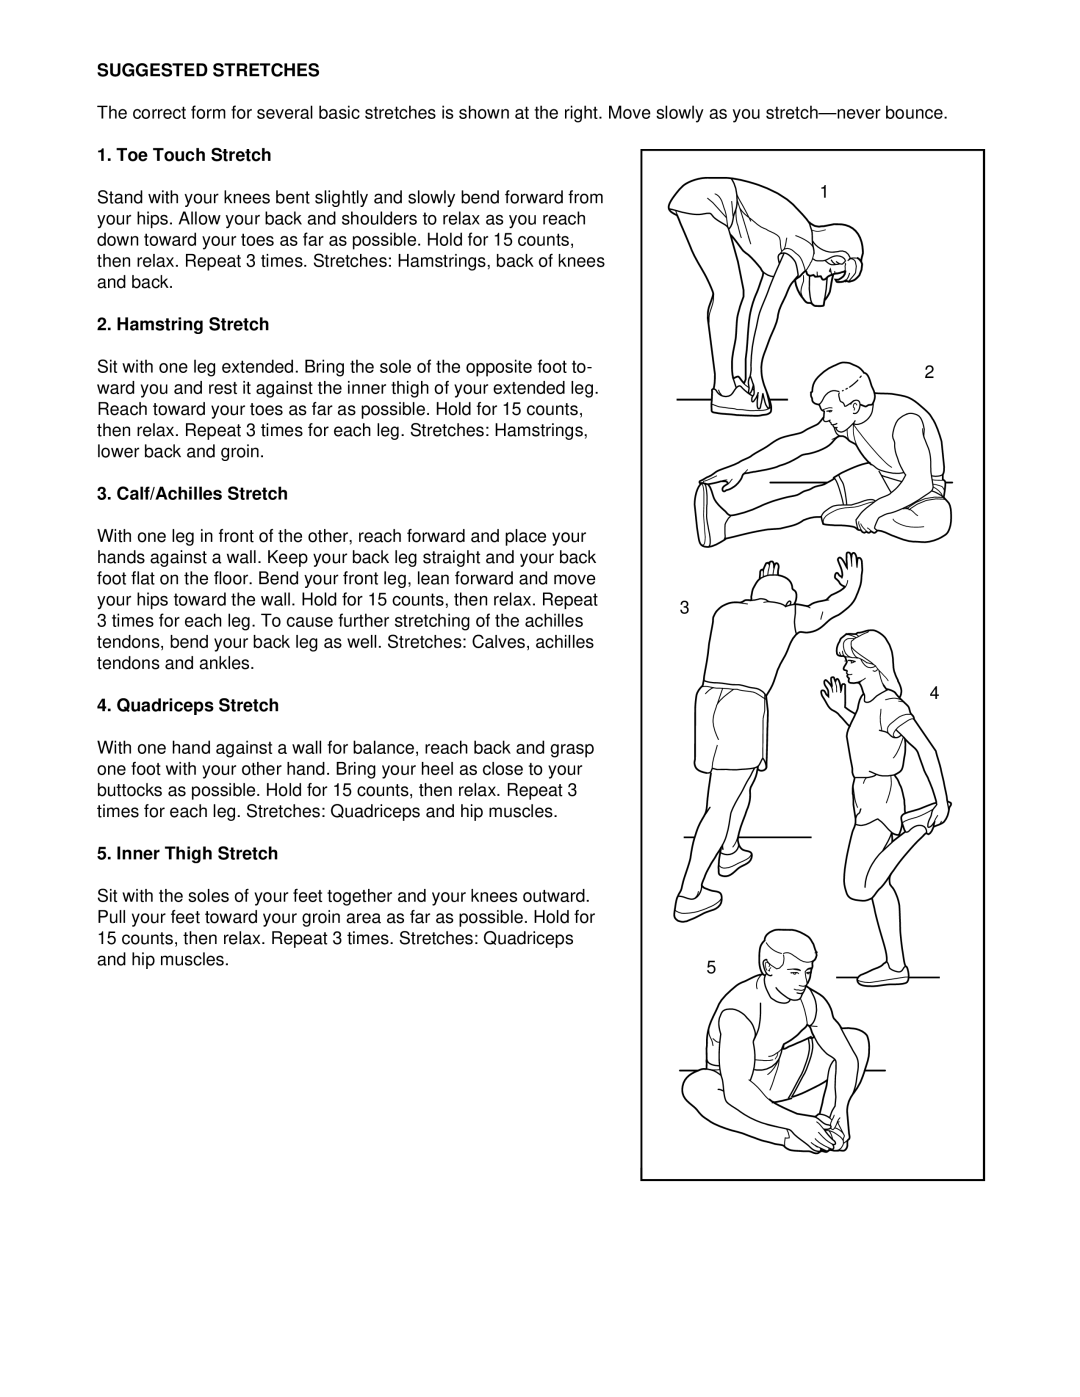 Healthrider HRTL14910 Suggested Stretches, Toe Touch Stretch, Hamstring Stretch, Calf/Achilles Stretch, Quadriceps Stretch 